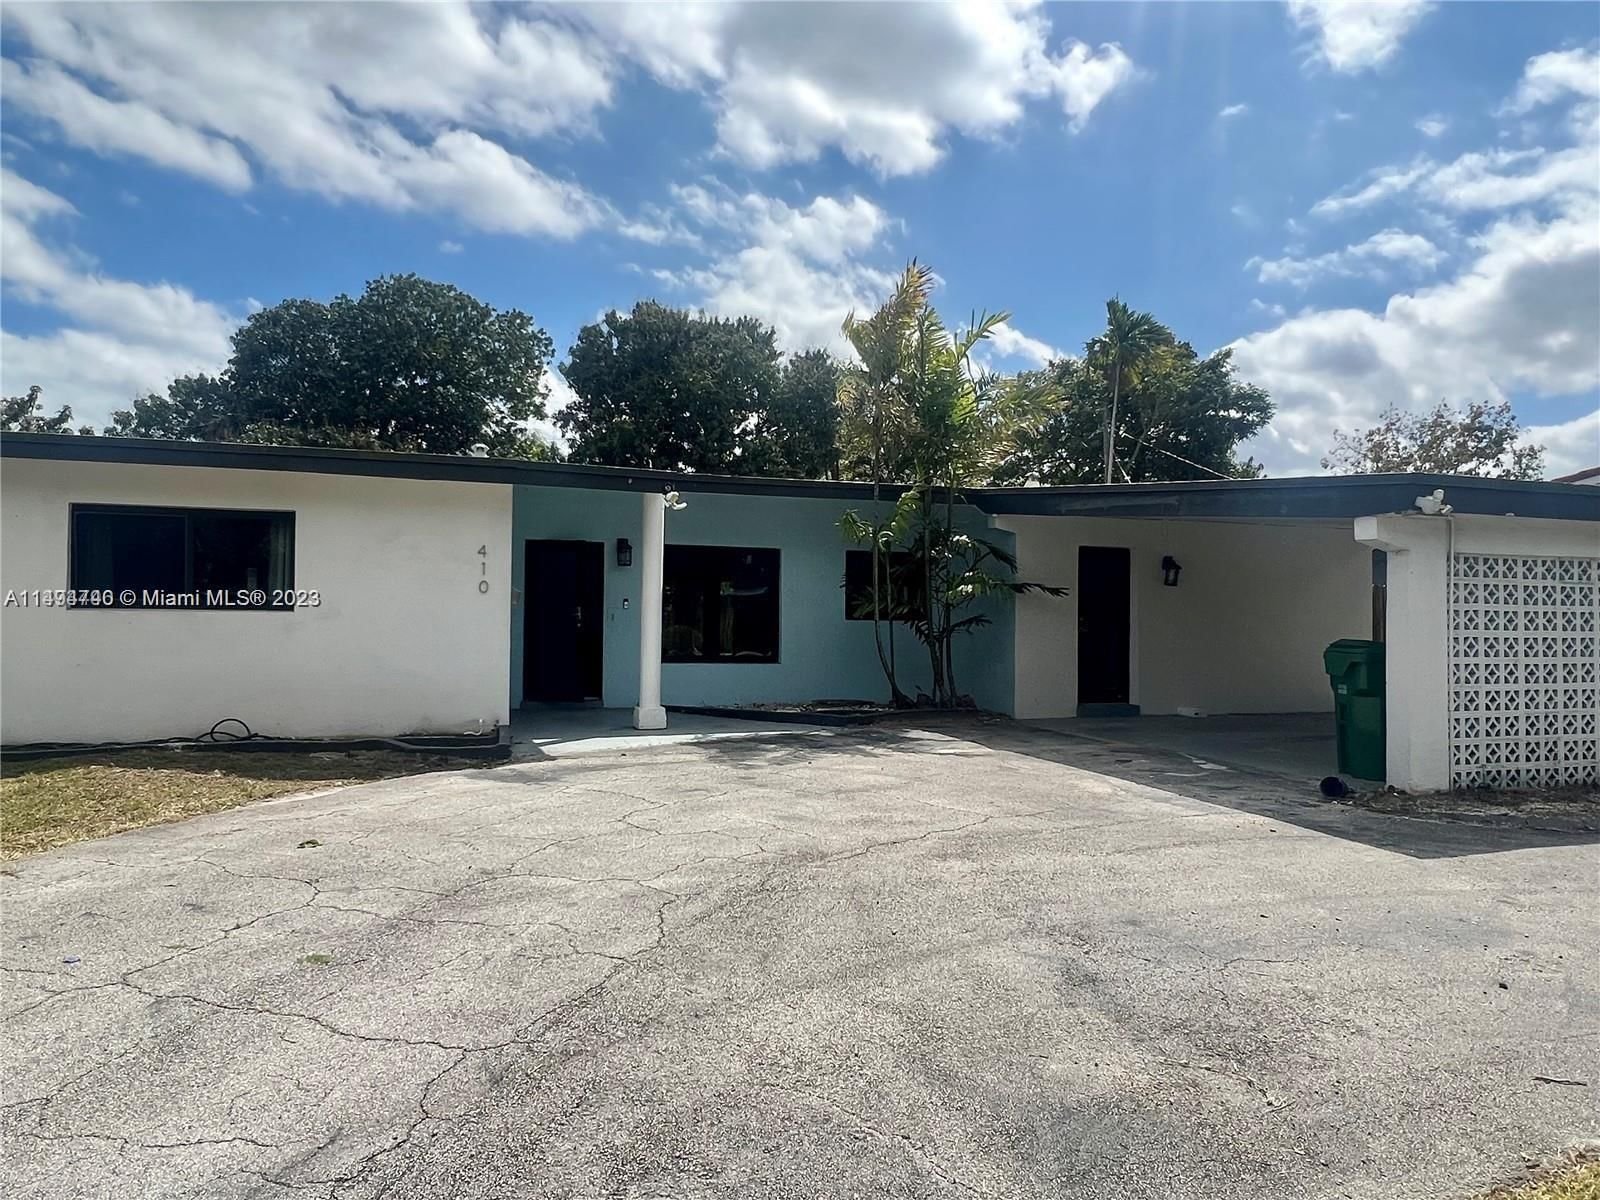 Real estate property located at 410 177th St, Miami-Dade County, FAIRMONT ESTS, North Miami Beach, FL